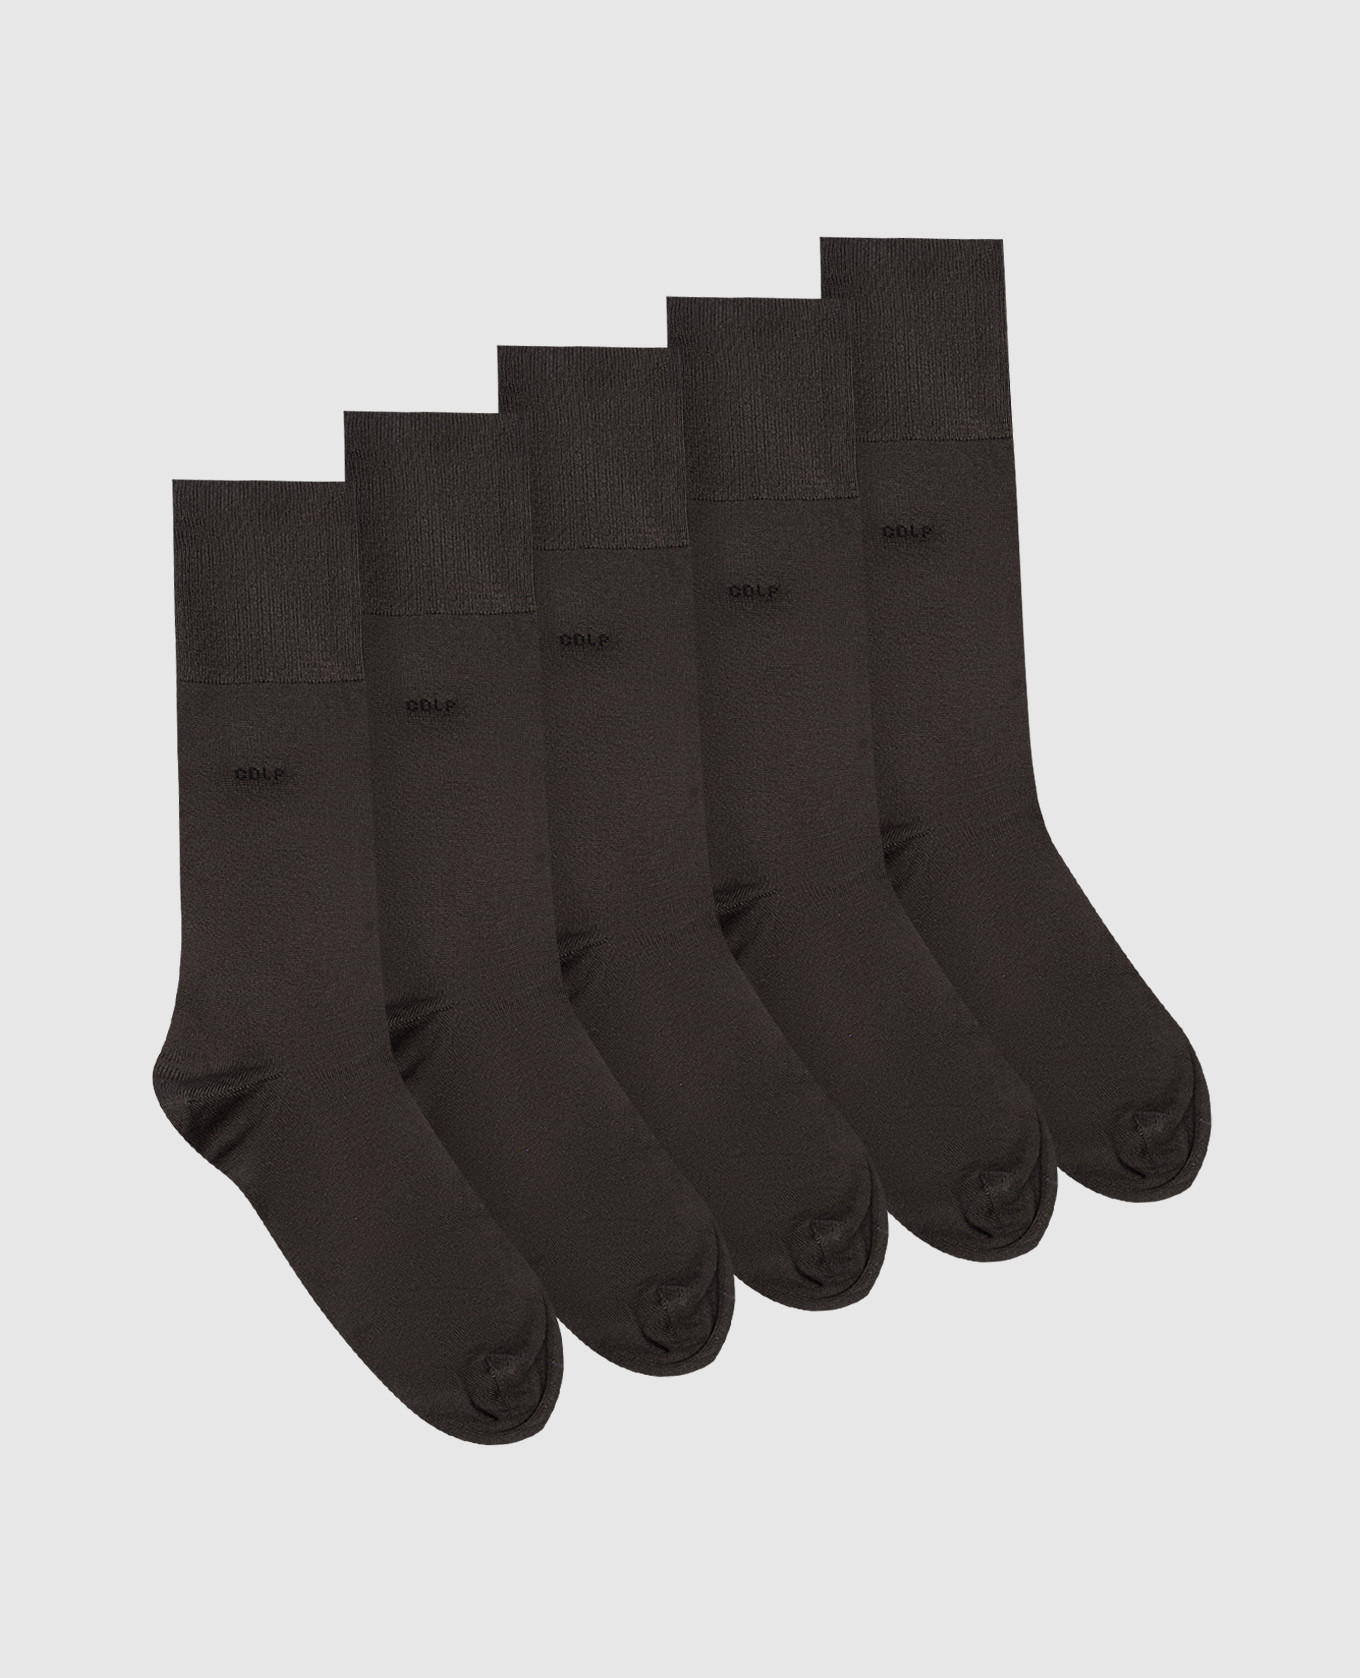 Set of gray socks with logo